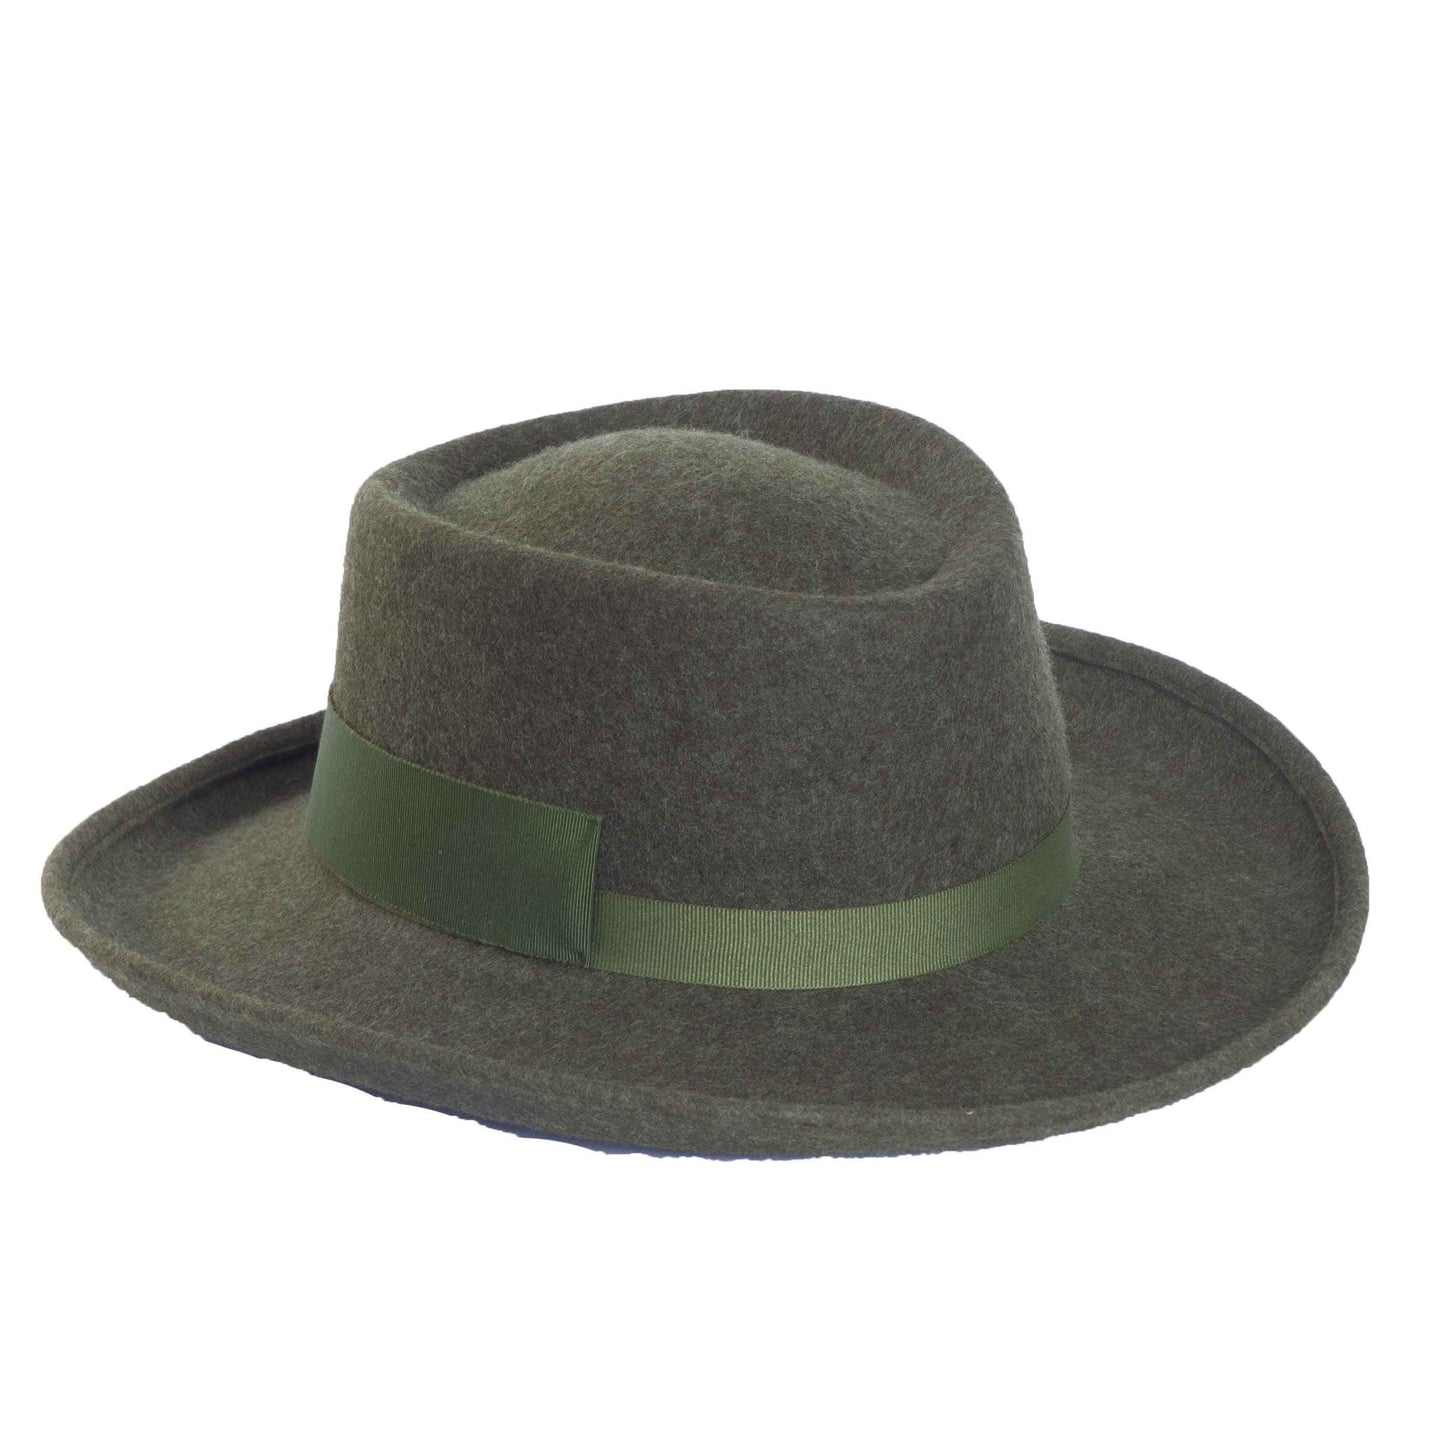 Kenzo, Wool Felt Hat, Olive